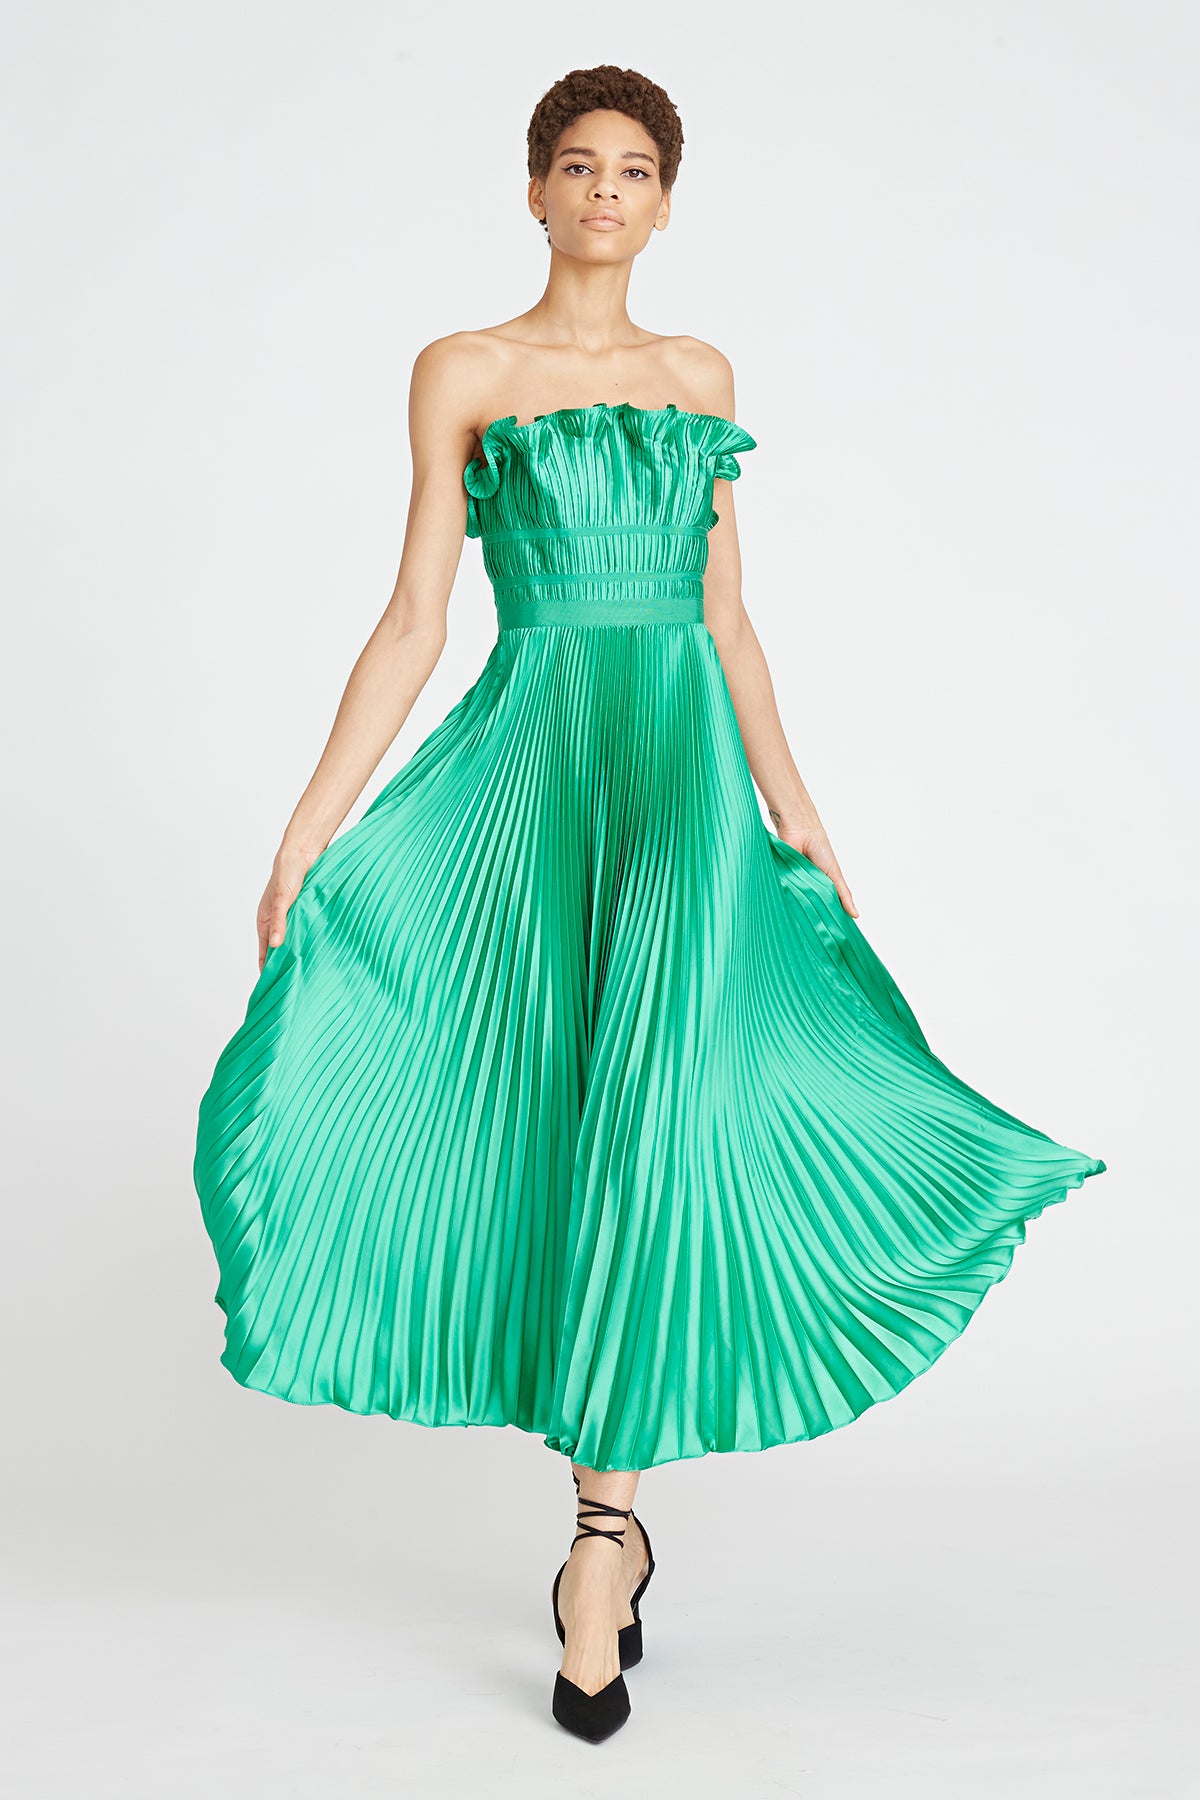 Giada Pleated Dress by AMUR for $162